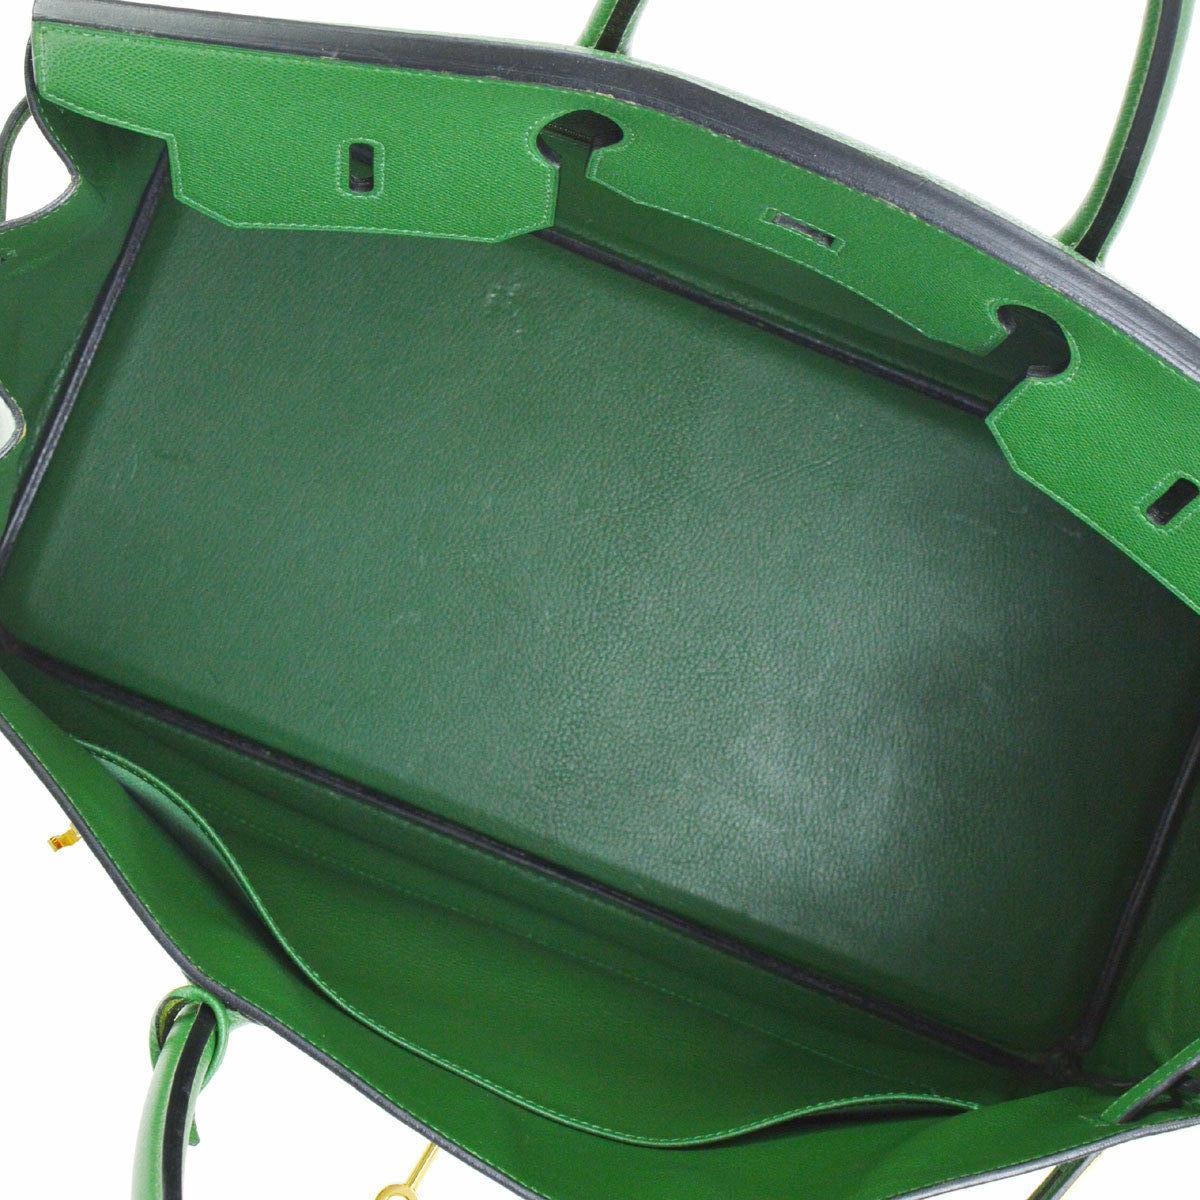 Hermes Birkin 40 Green Leather Gold Carryall Travel Top Handle Satchel Tote Bag 2